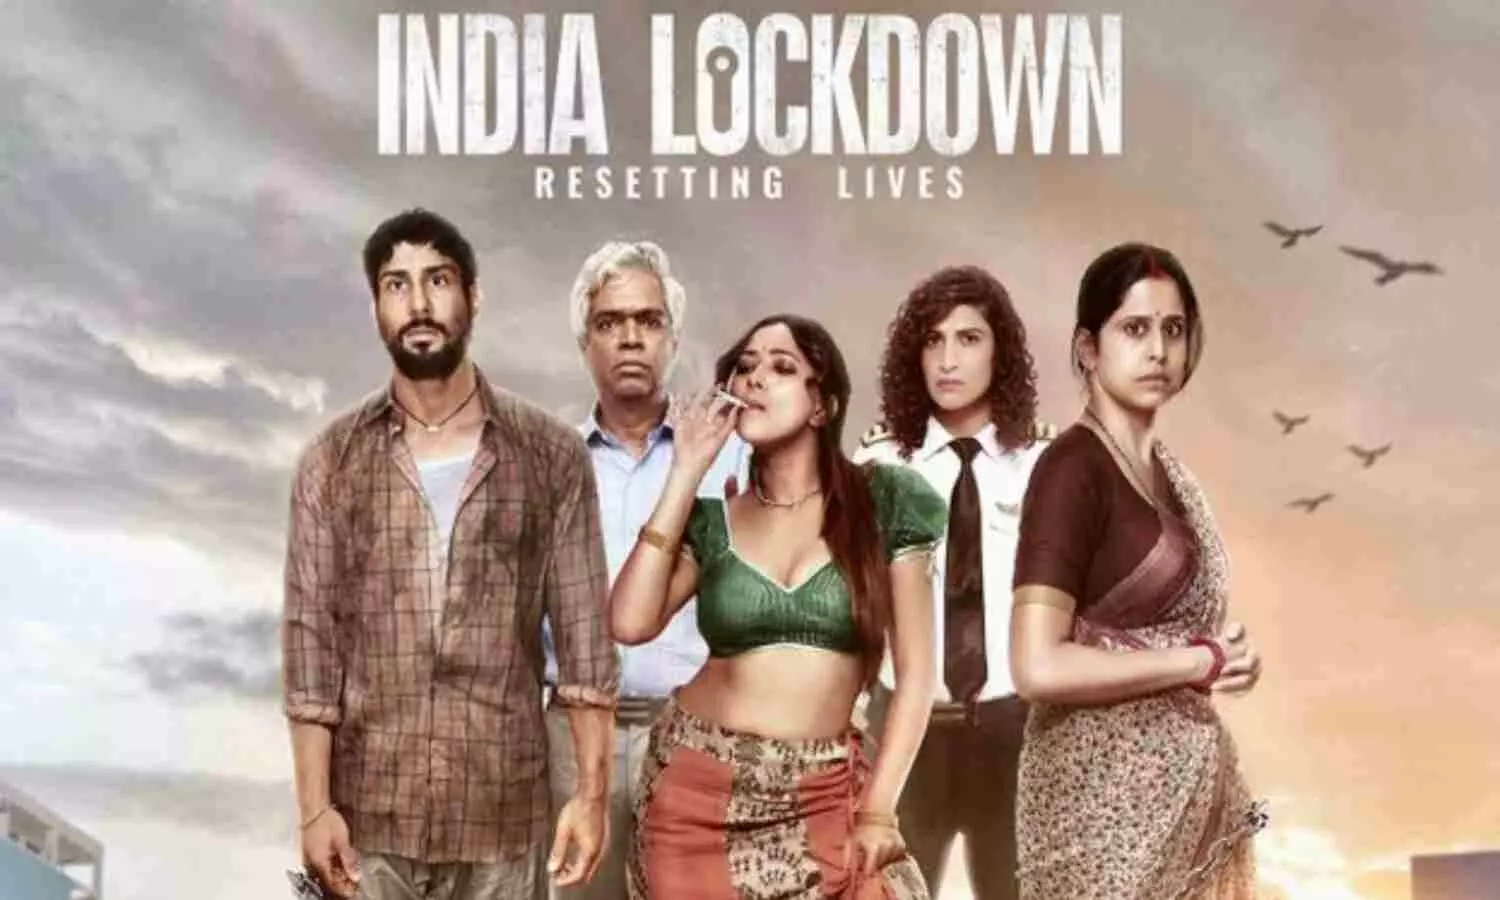 India Lockdown